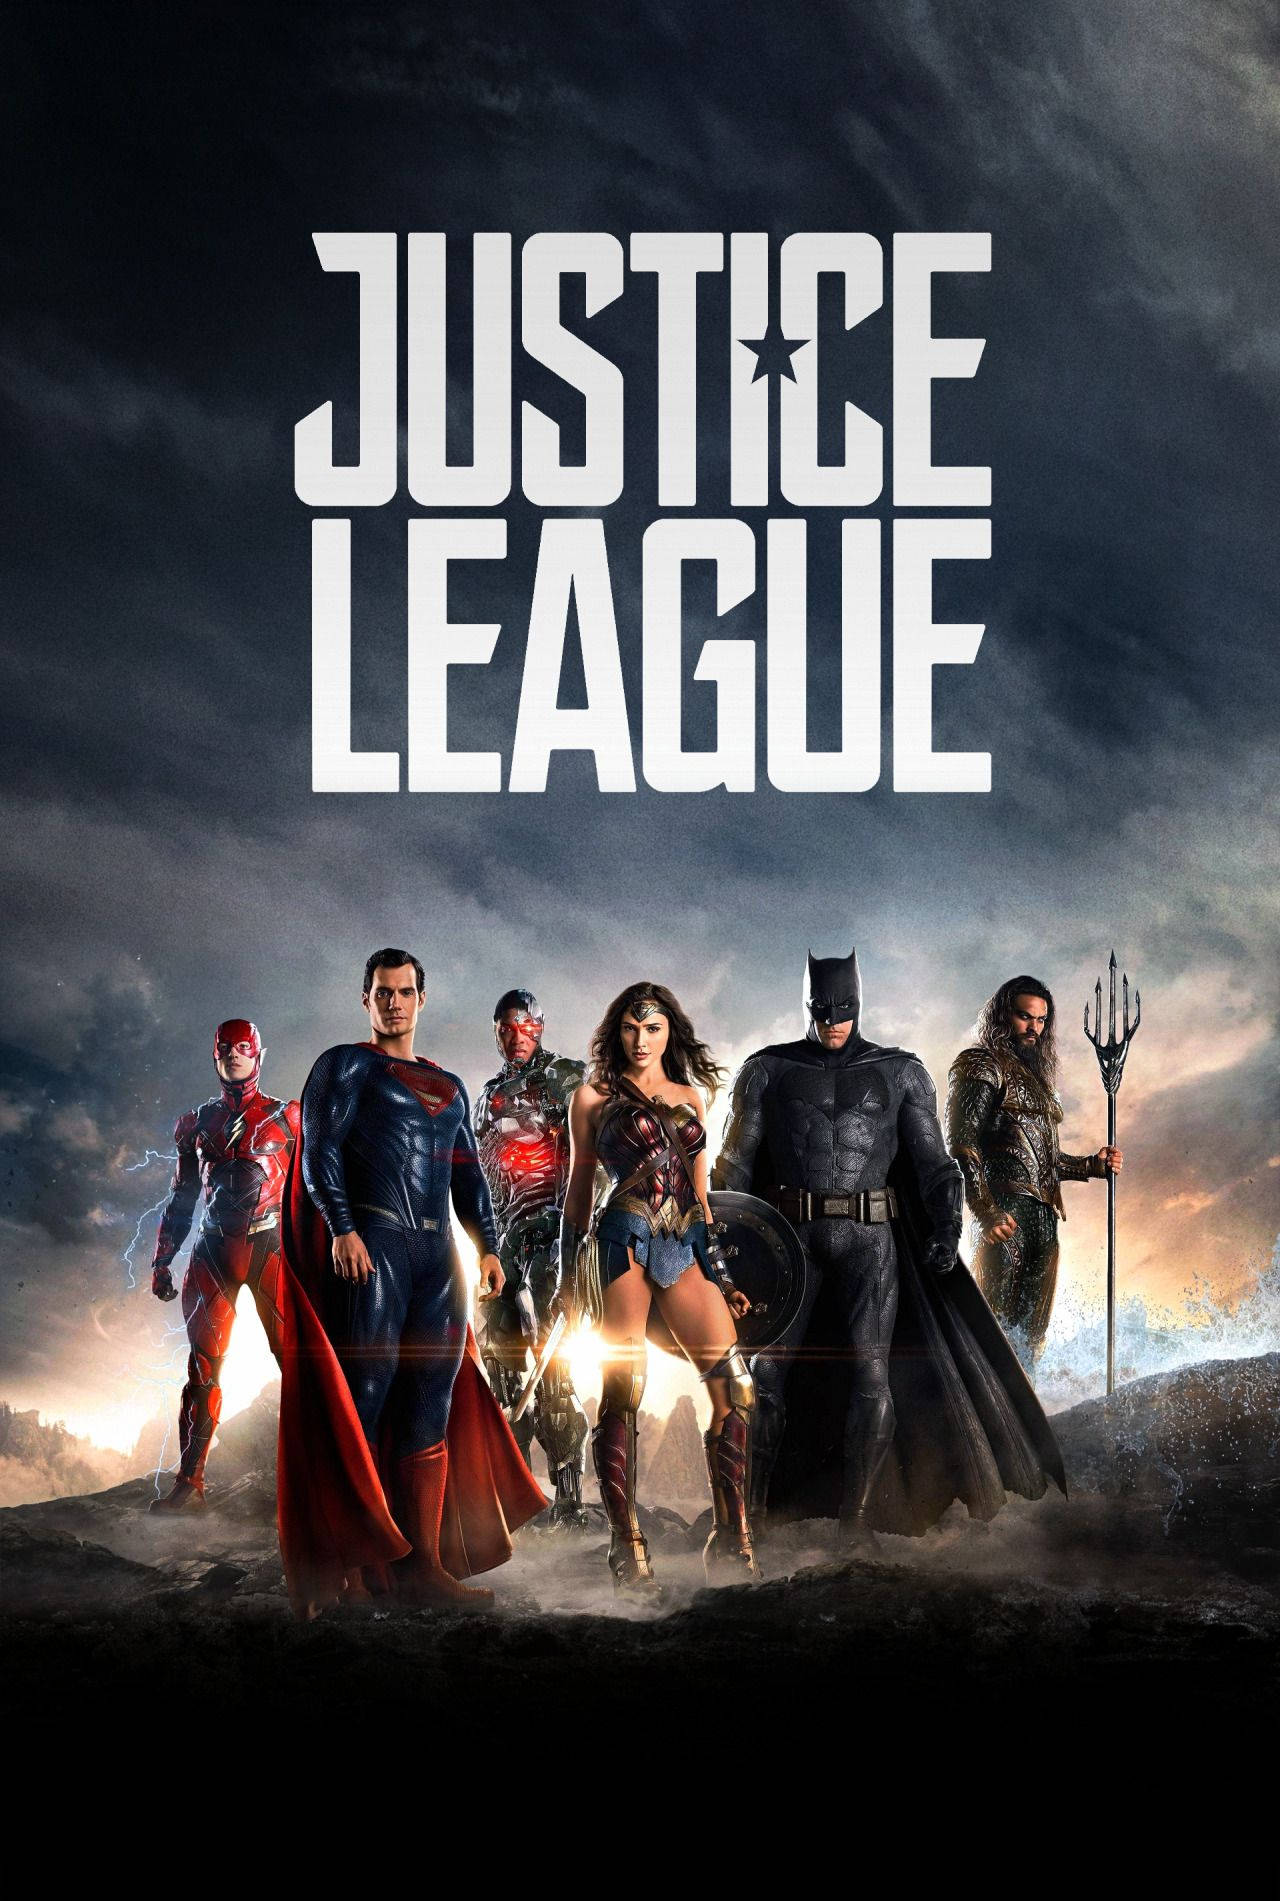 Justice League Title Phone Wallpaper